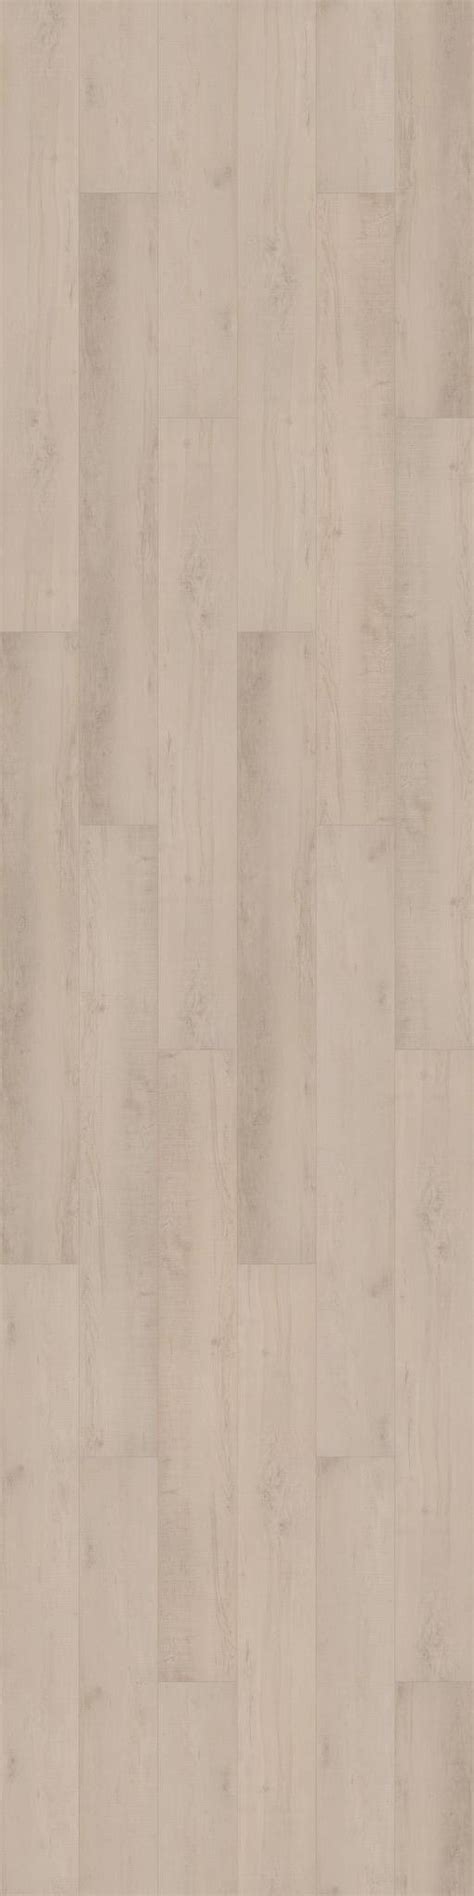 Coretec Plus Enhanced Xl Hayes Oak National Flooring Outlet